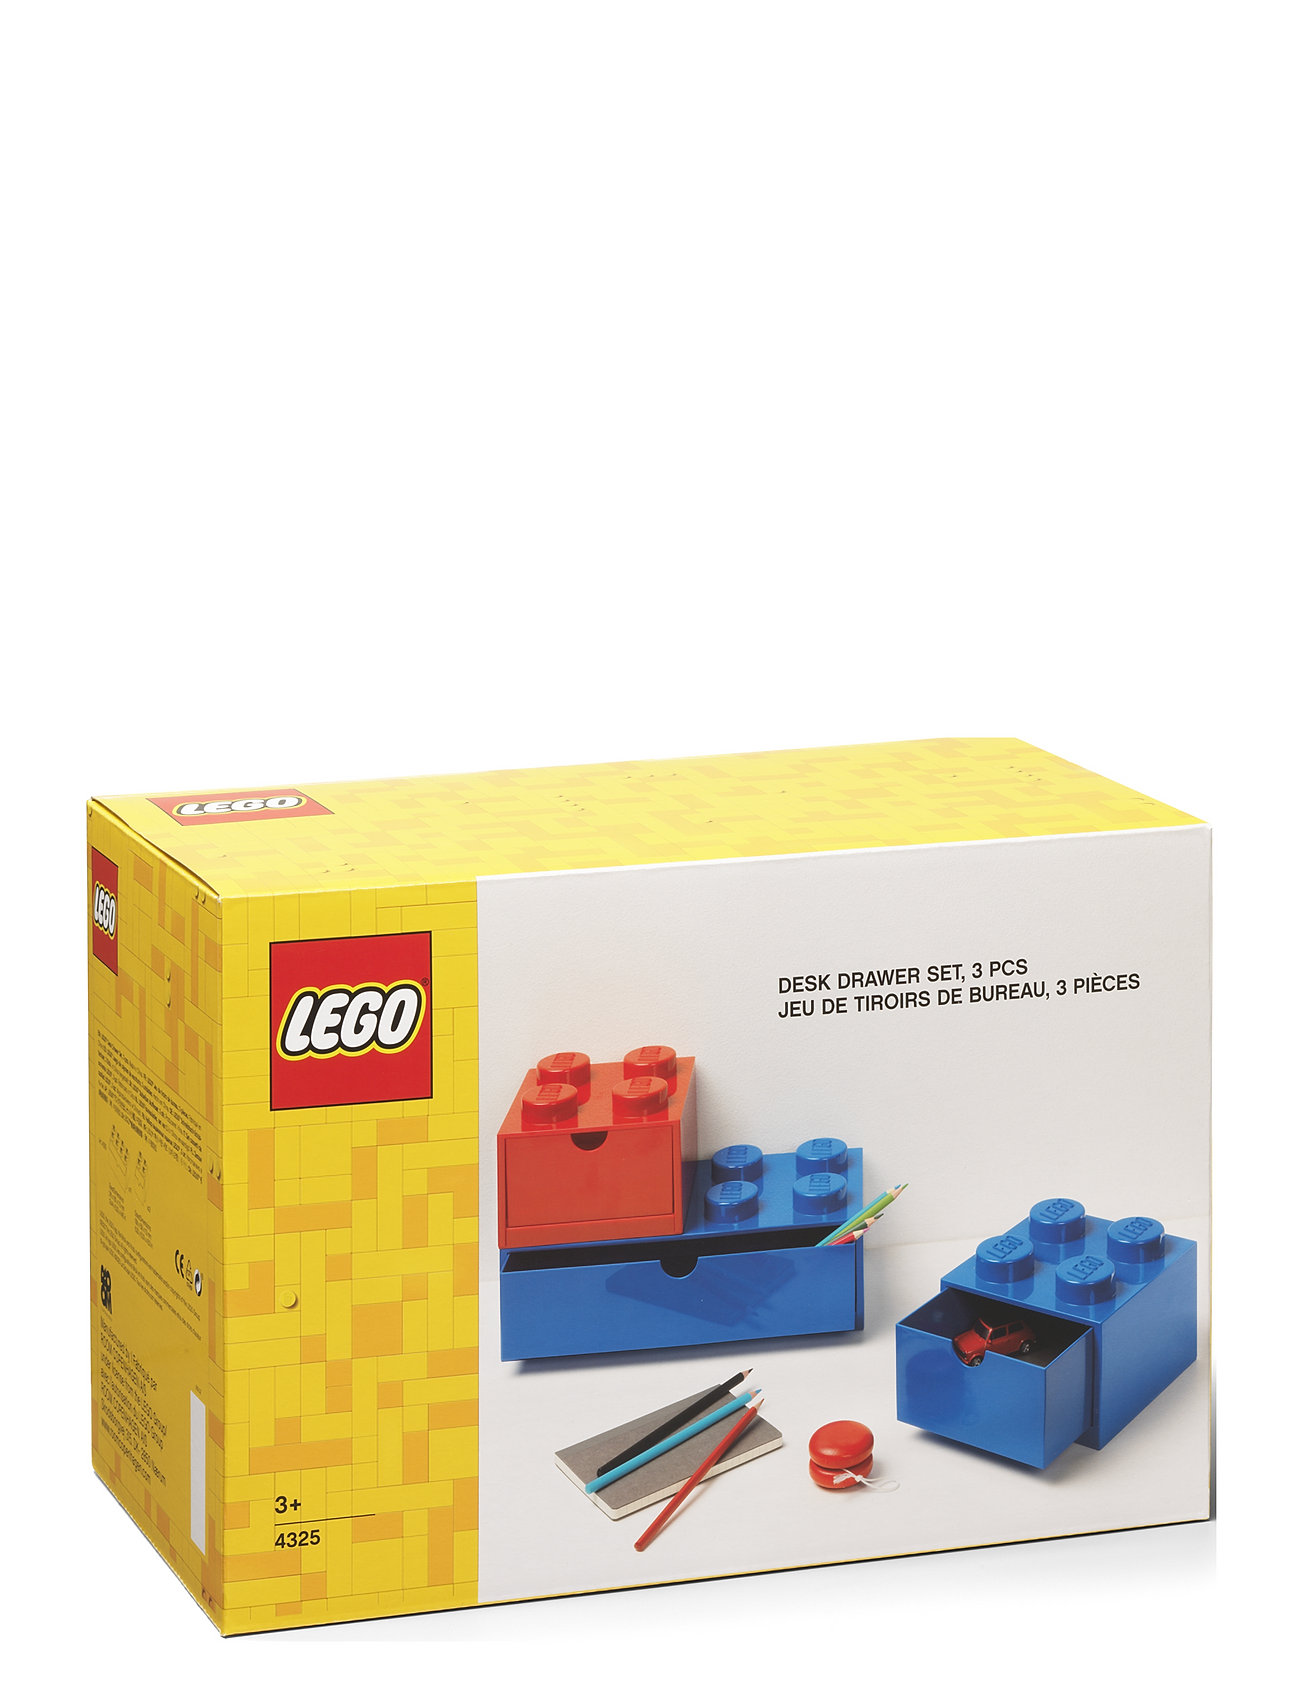 LEGO STORAGE Lego Desk Drawer Set - Blue & Red - Decor - Boozt.com